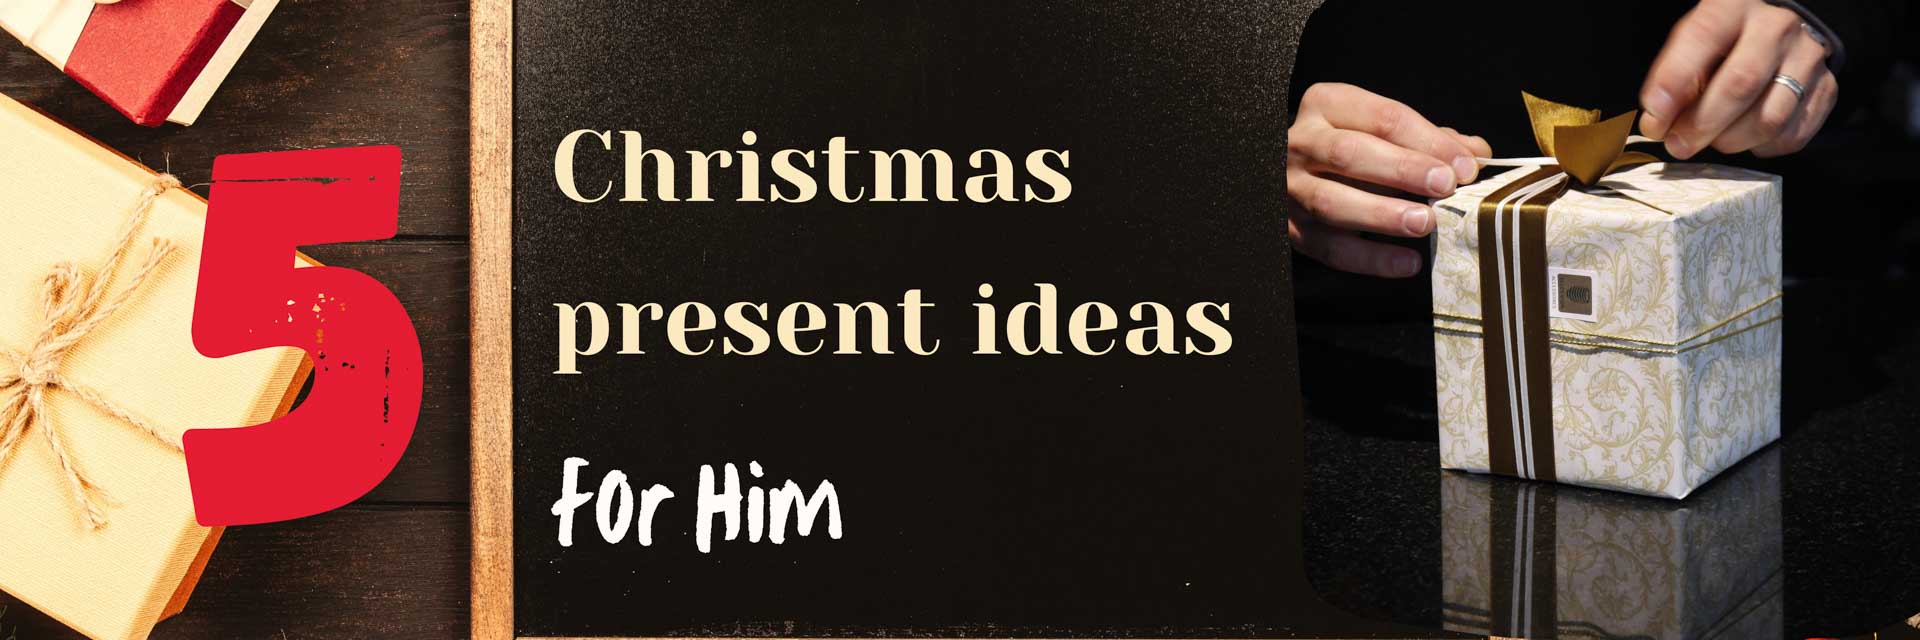 NAYAVITA christmas present ideas for him post banner